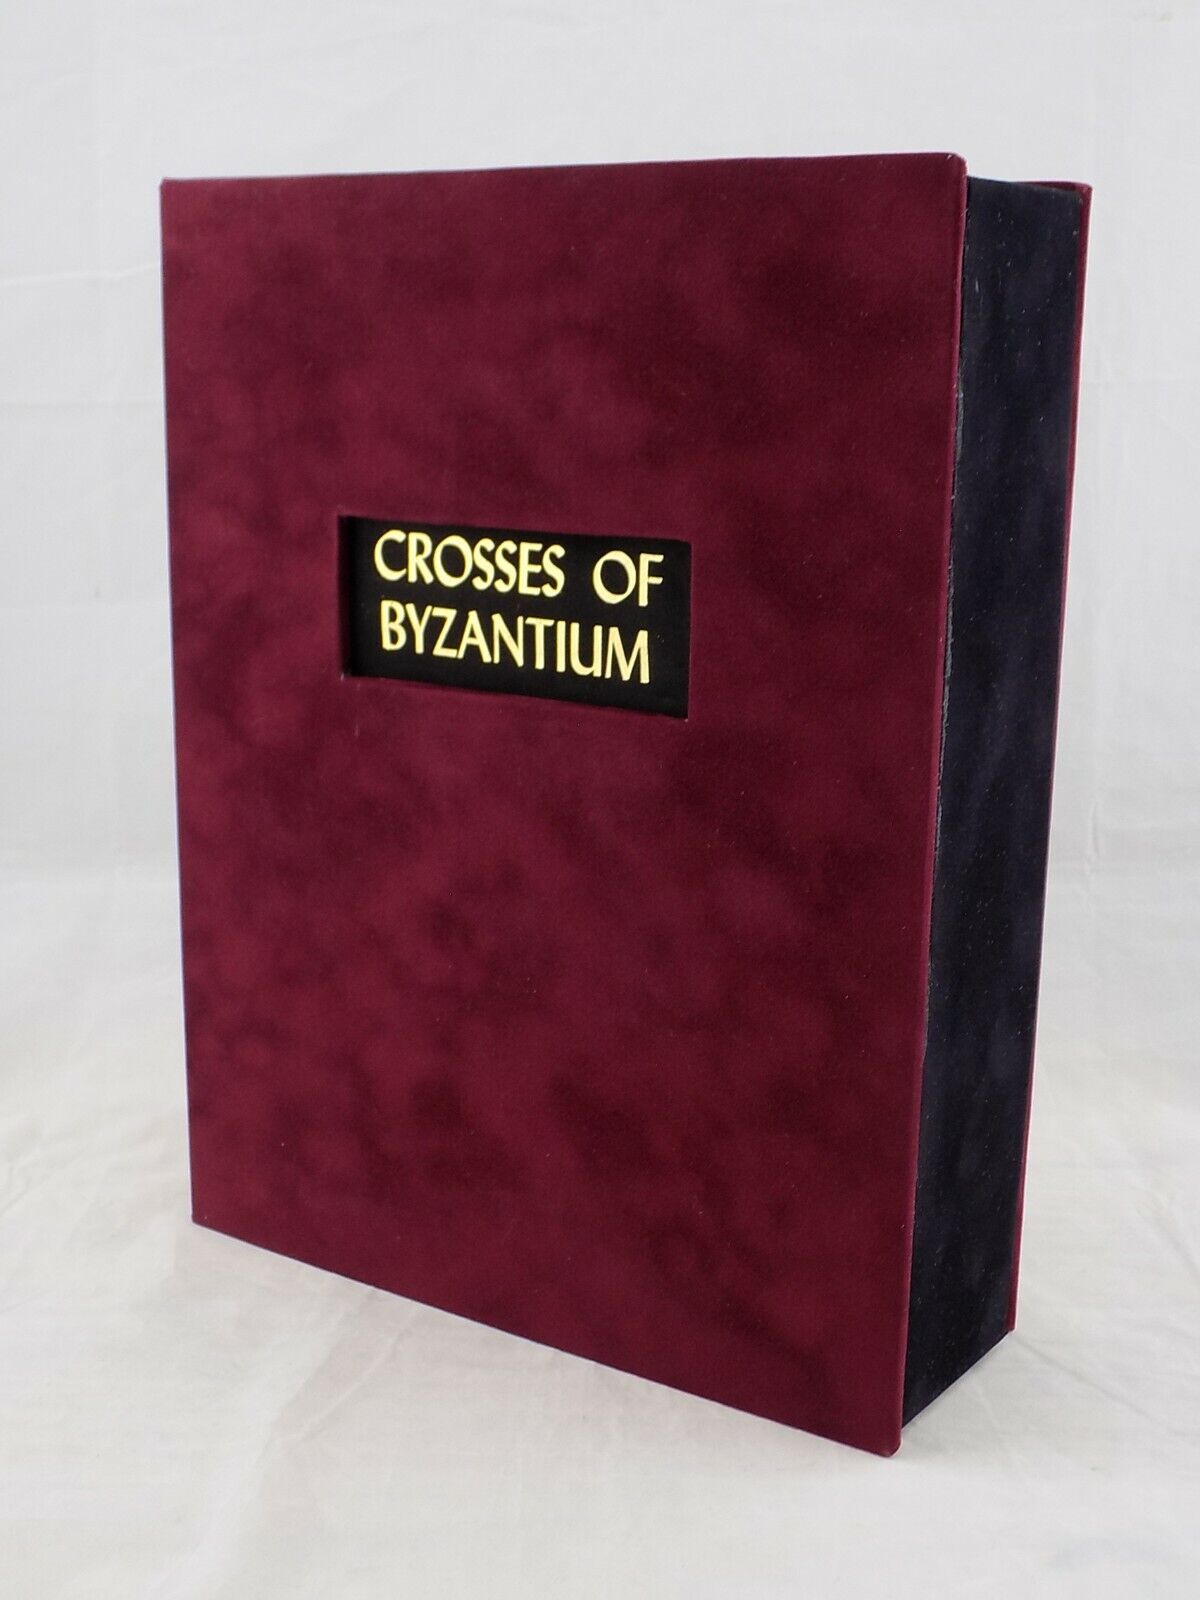  RELIQUARY CROSS SET 6th- 8th CENTURY A.D. CROSSES OF BYZANTIUM BIBLE BYZANTINE